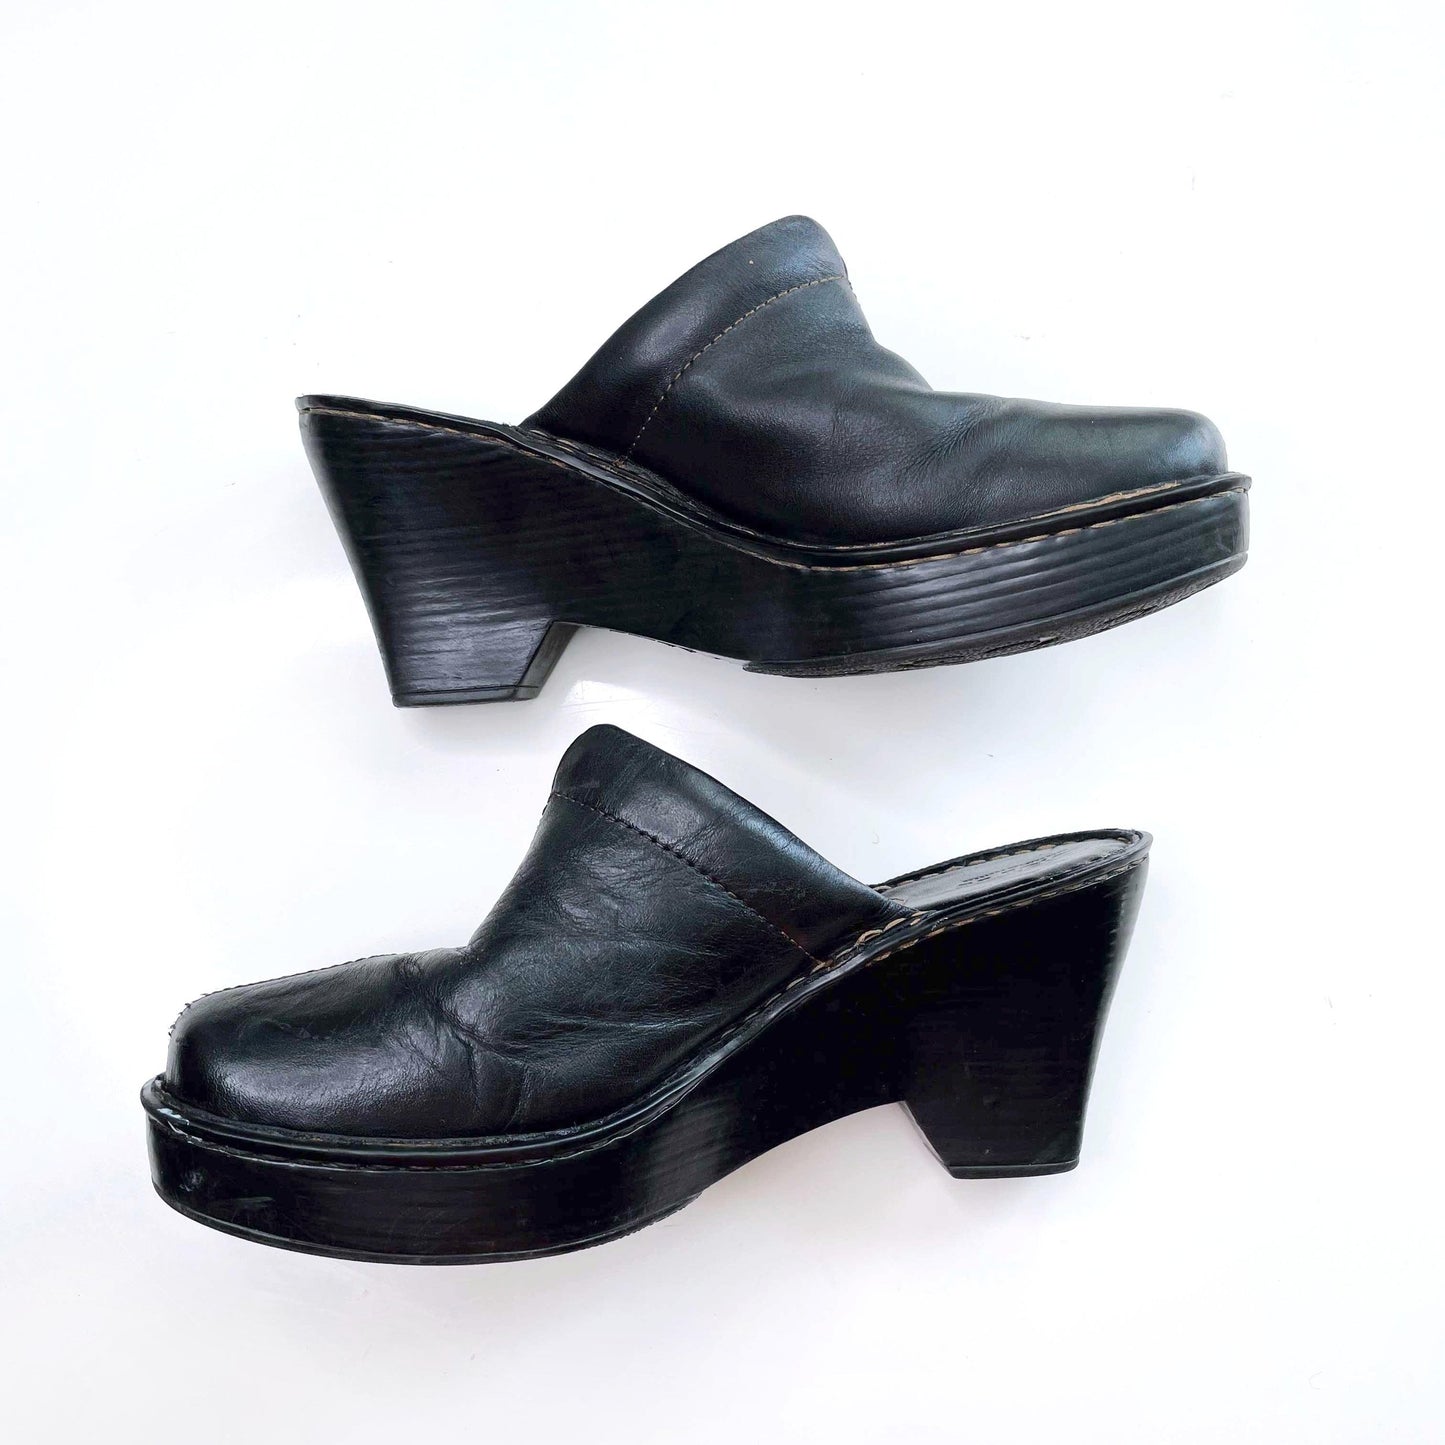 born black leather slip on clogs - size 9